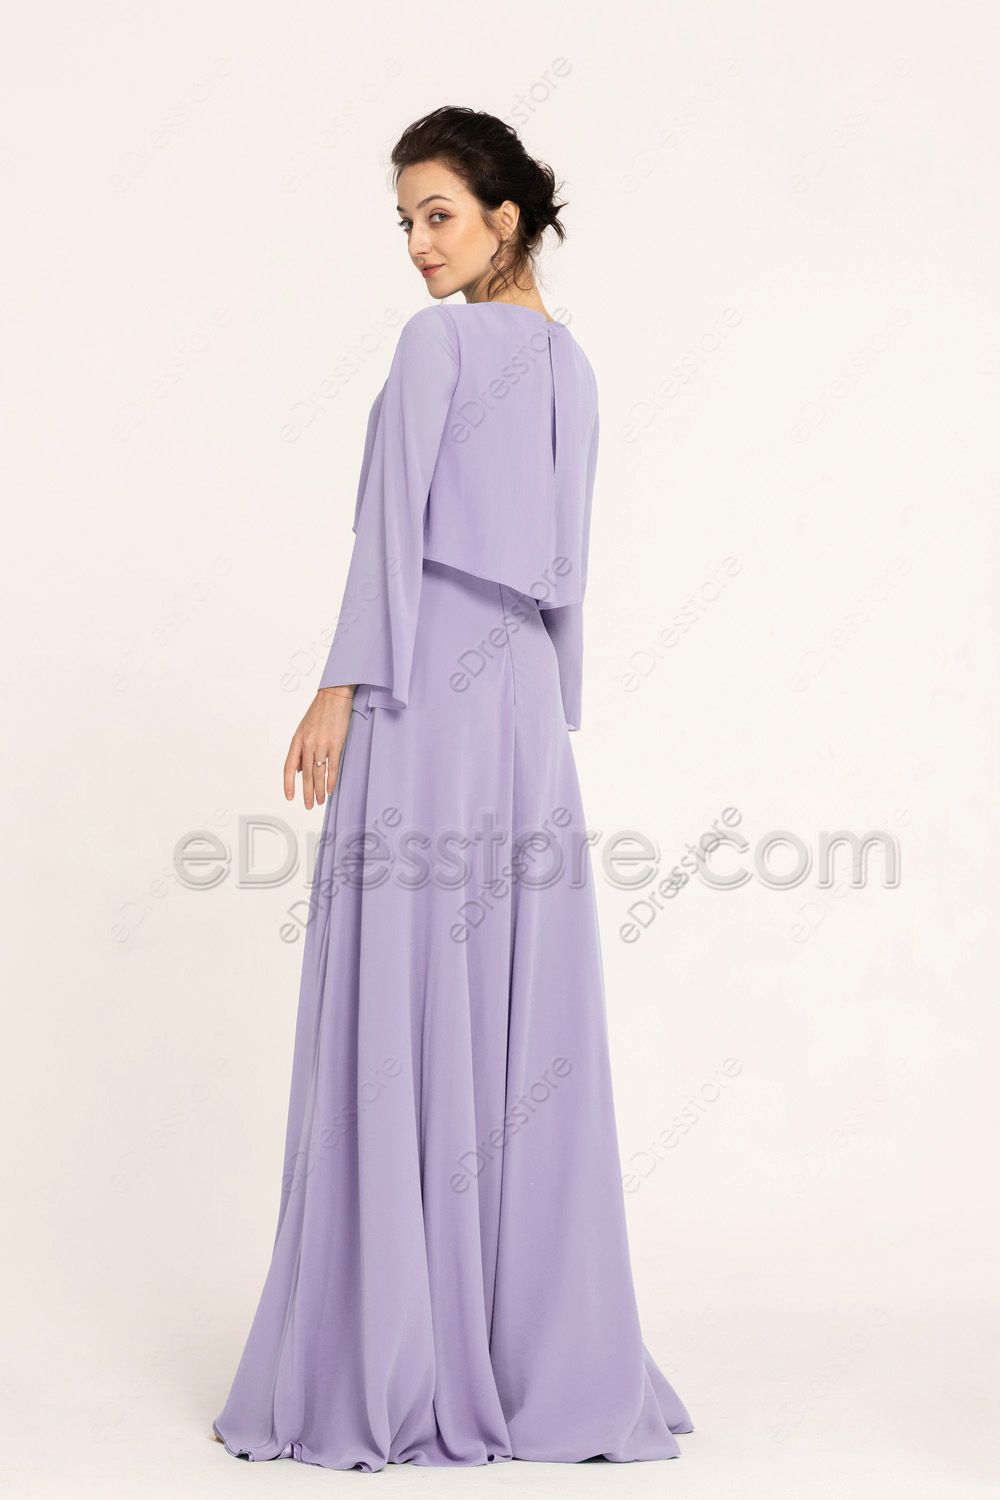 Modest Popover Lavender Bridesmaid Dresses with Sleeves | eDresstore